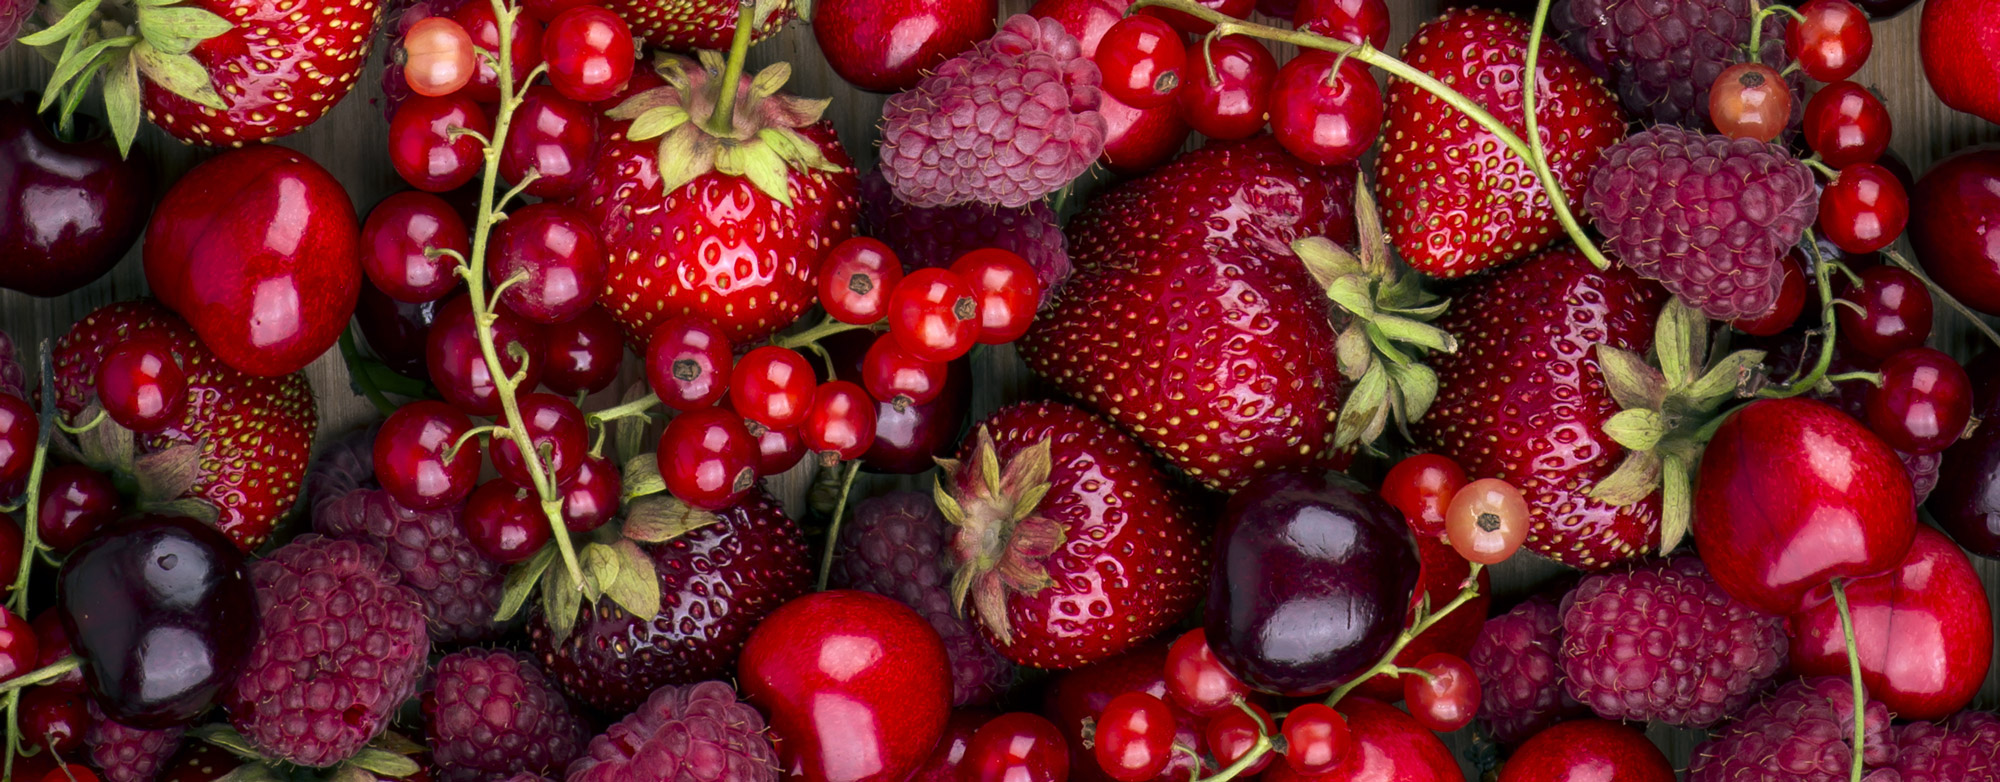 A close-up of fresh red strawberries, cherries, raspberries and huckleberries.